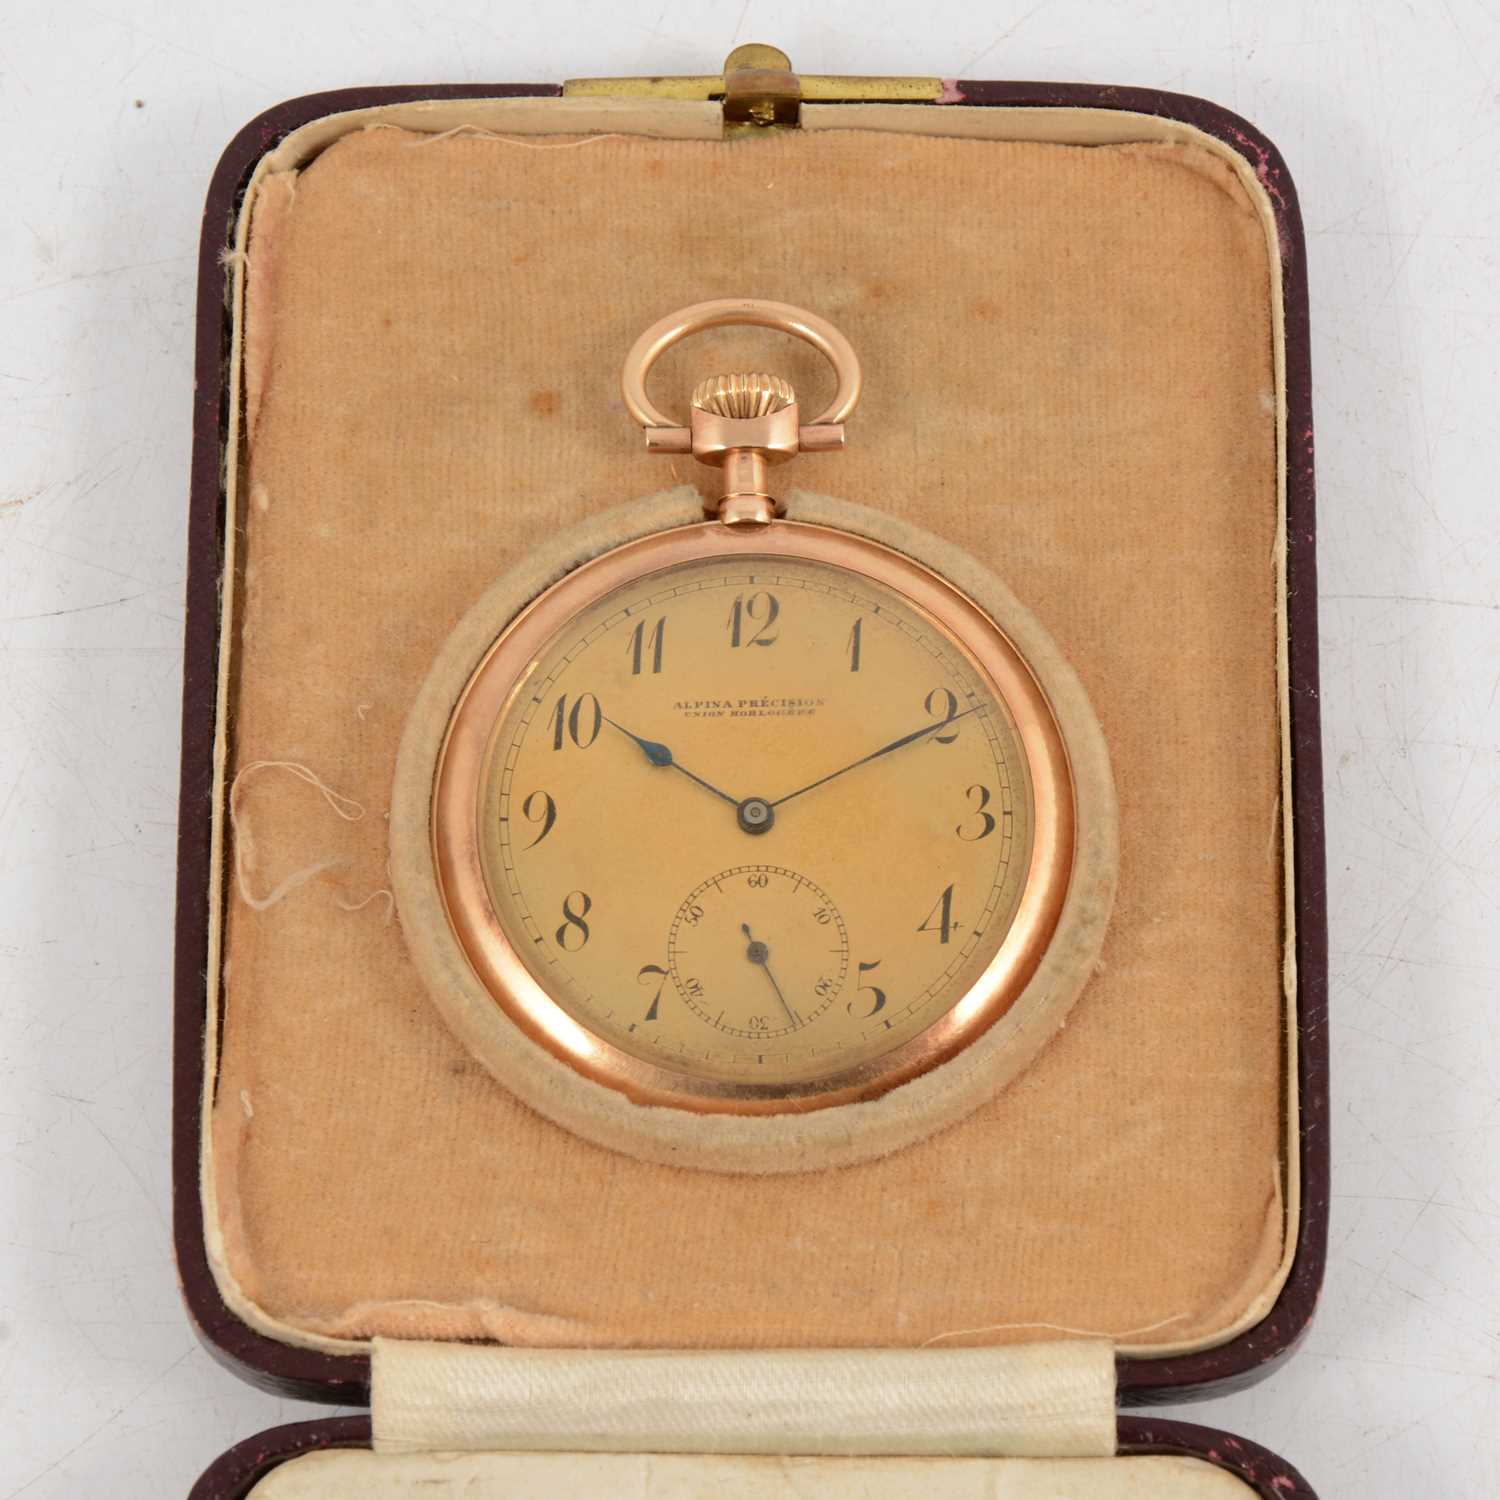 Lot 112 - Alpina Precision Union Horlogere - a 585 standard yellow gold open face pocket watch